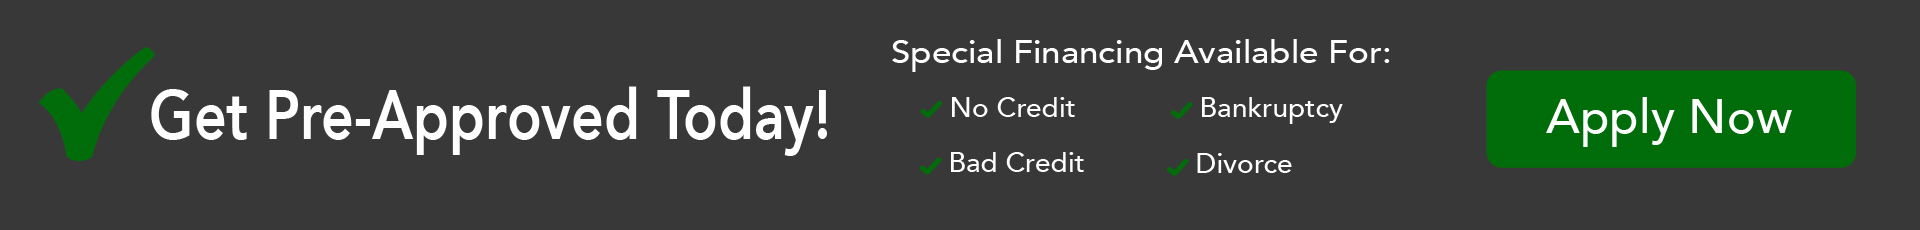 Get Pre-Approved. Special financing for: no credit, bankruptcy, bad credit, divorce.